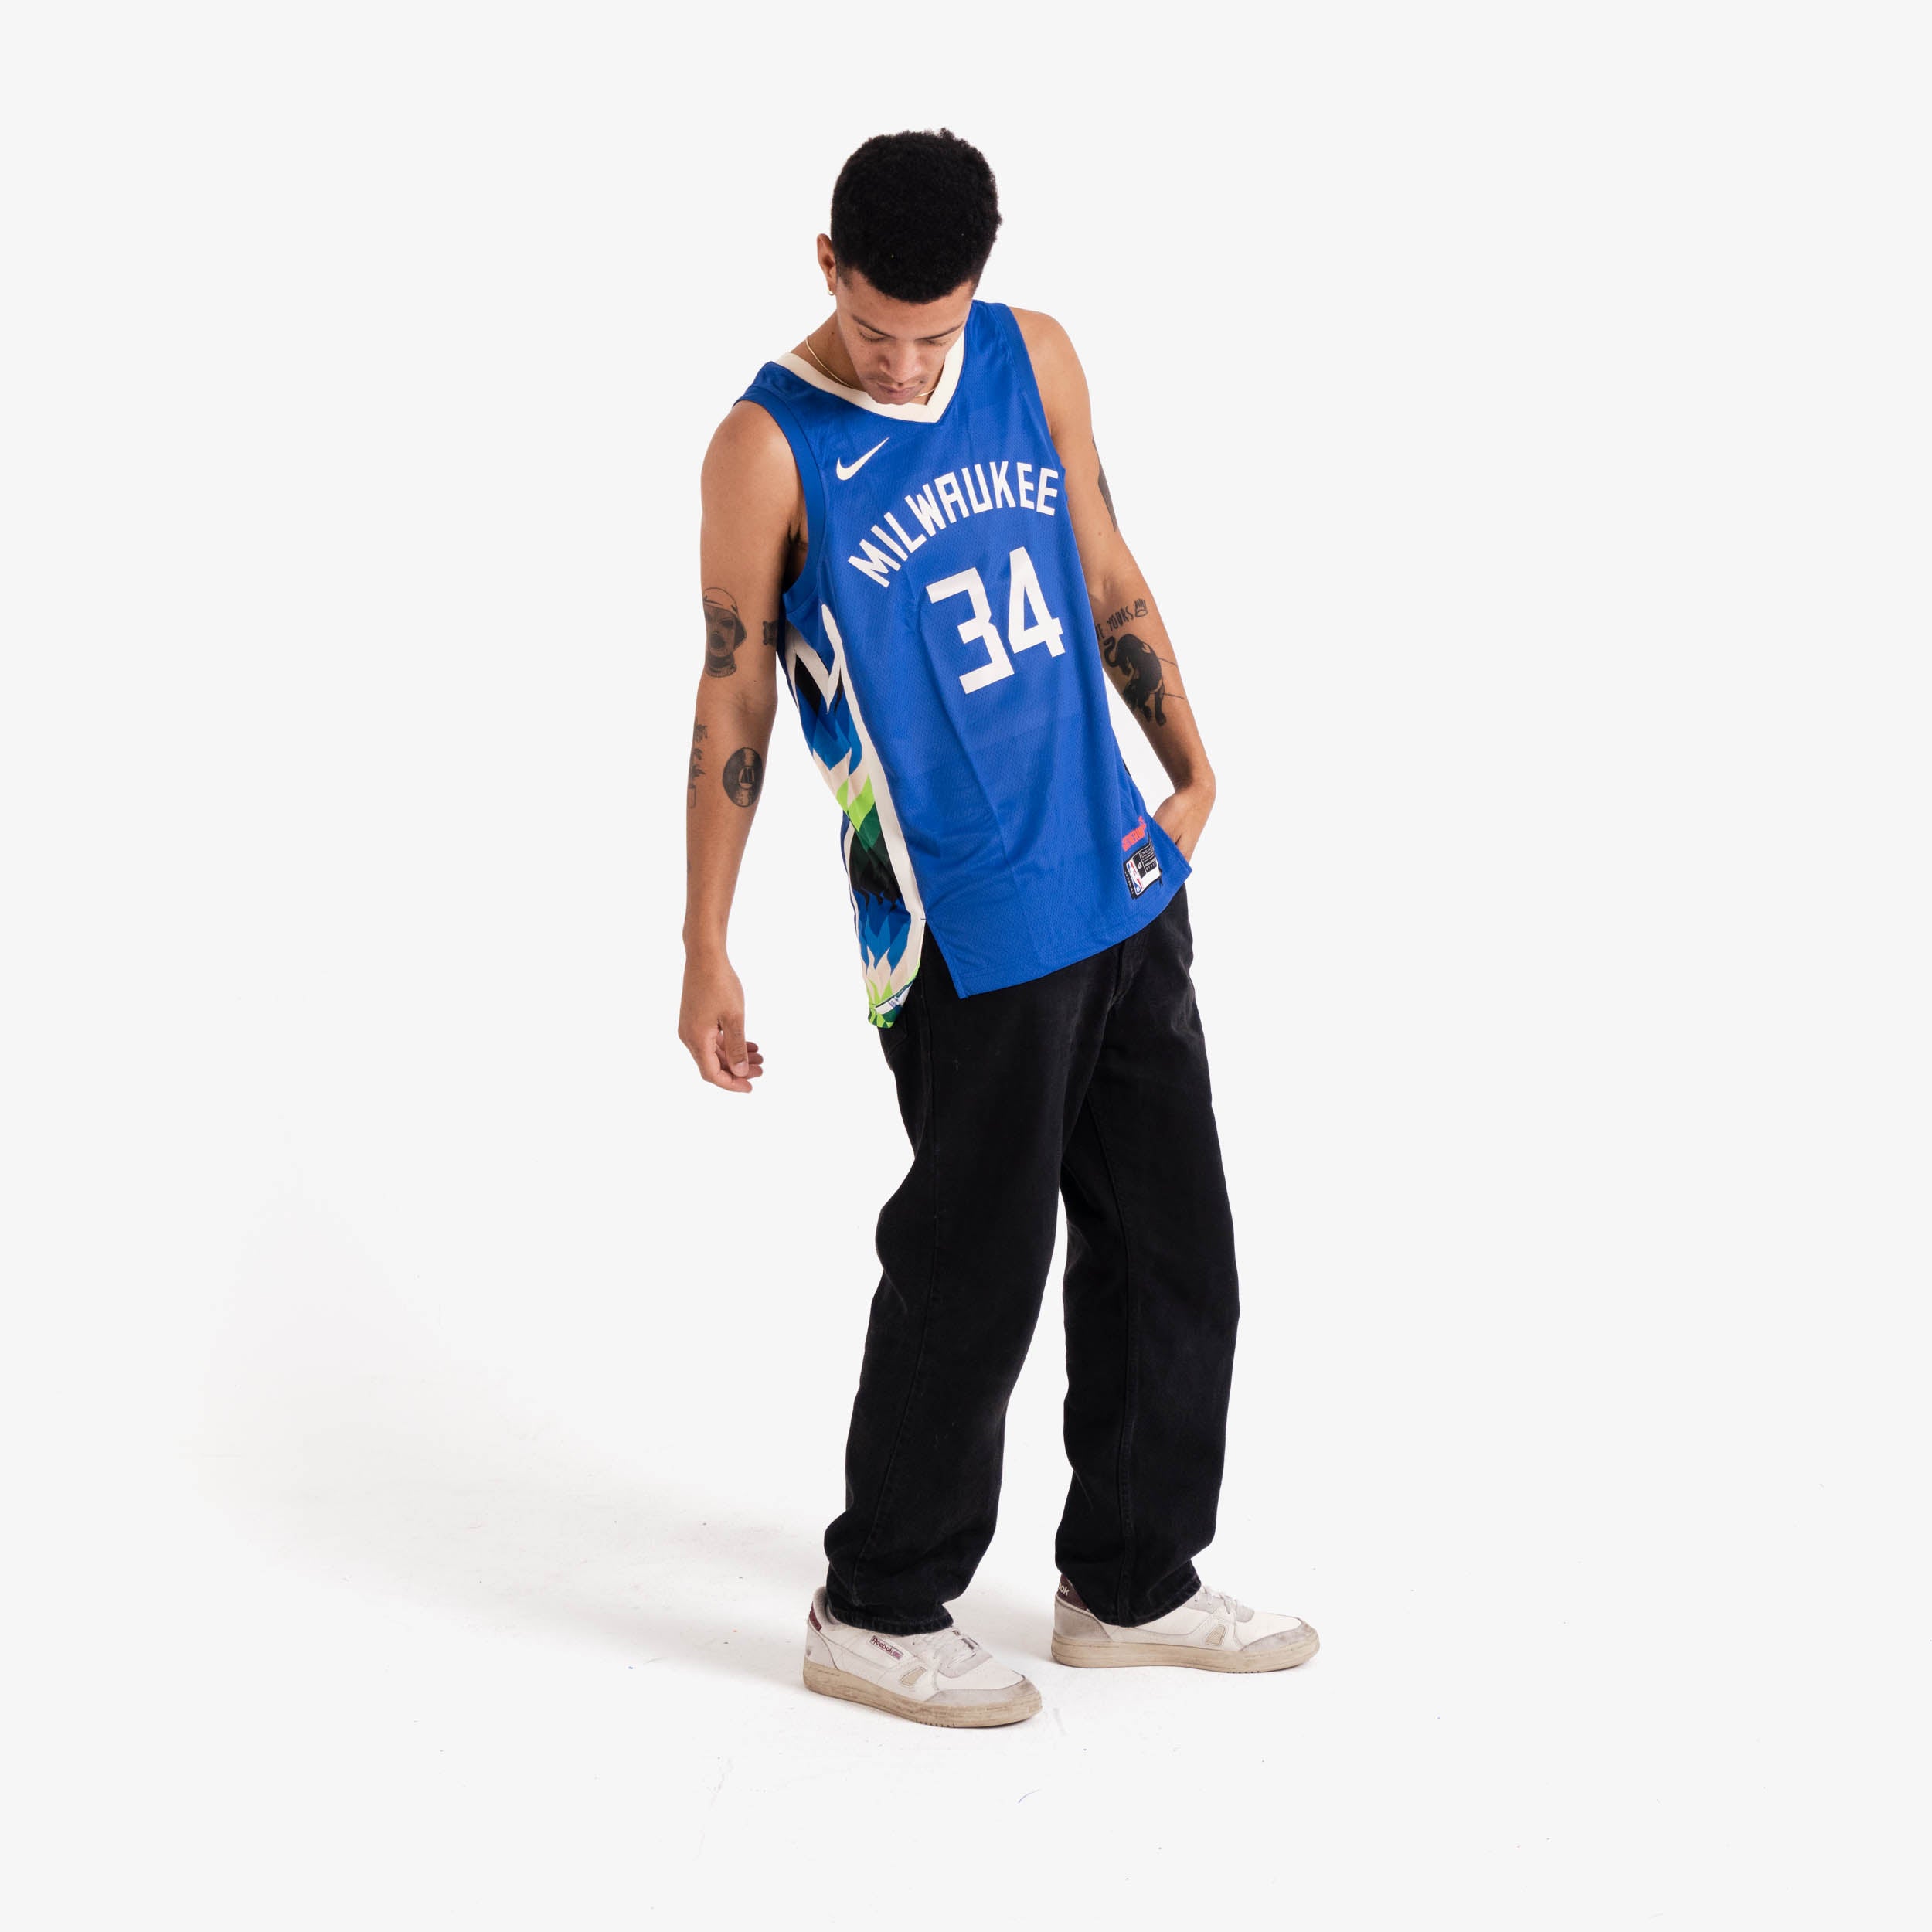 Giannis Antetokounmpo Bucks – City Edition Nike NBA Swingman